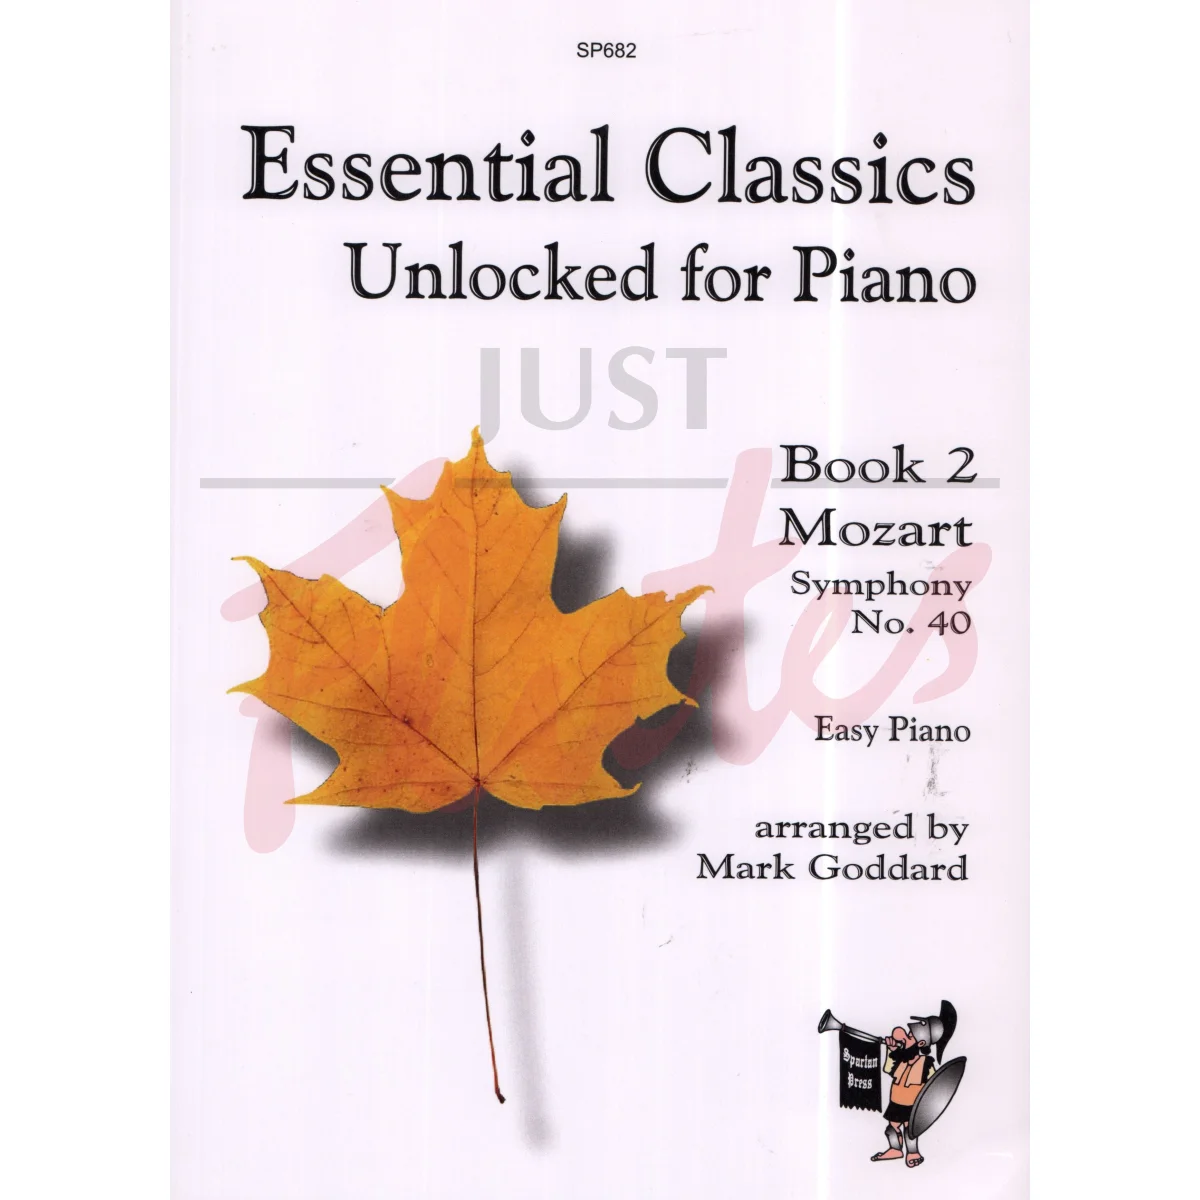 Essential Classics Unlocked for Piano: Book 2, Mozart Symphony No 40